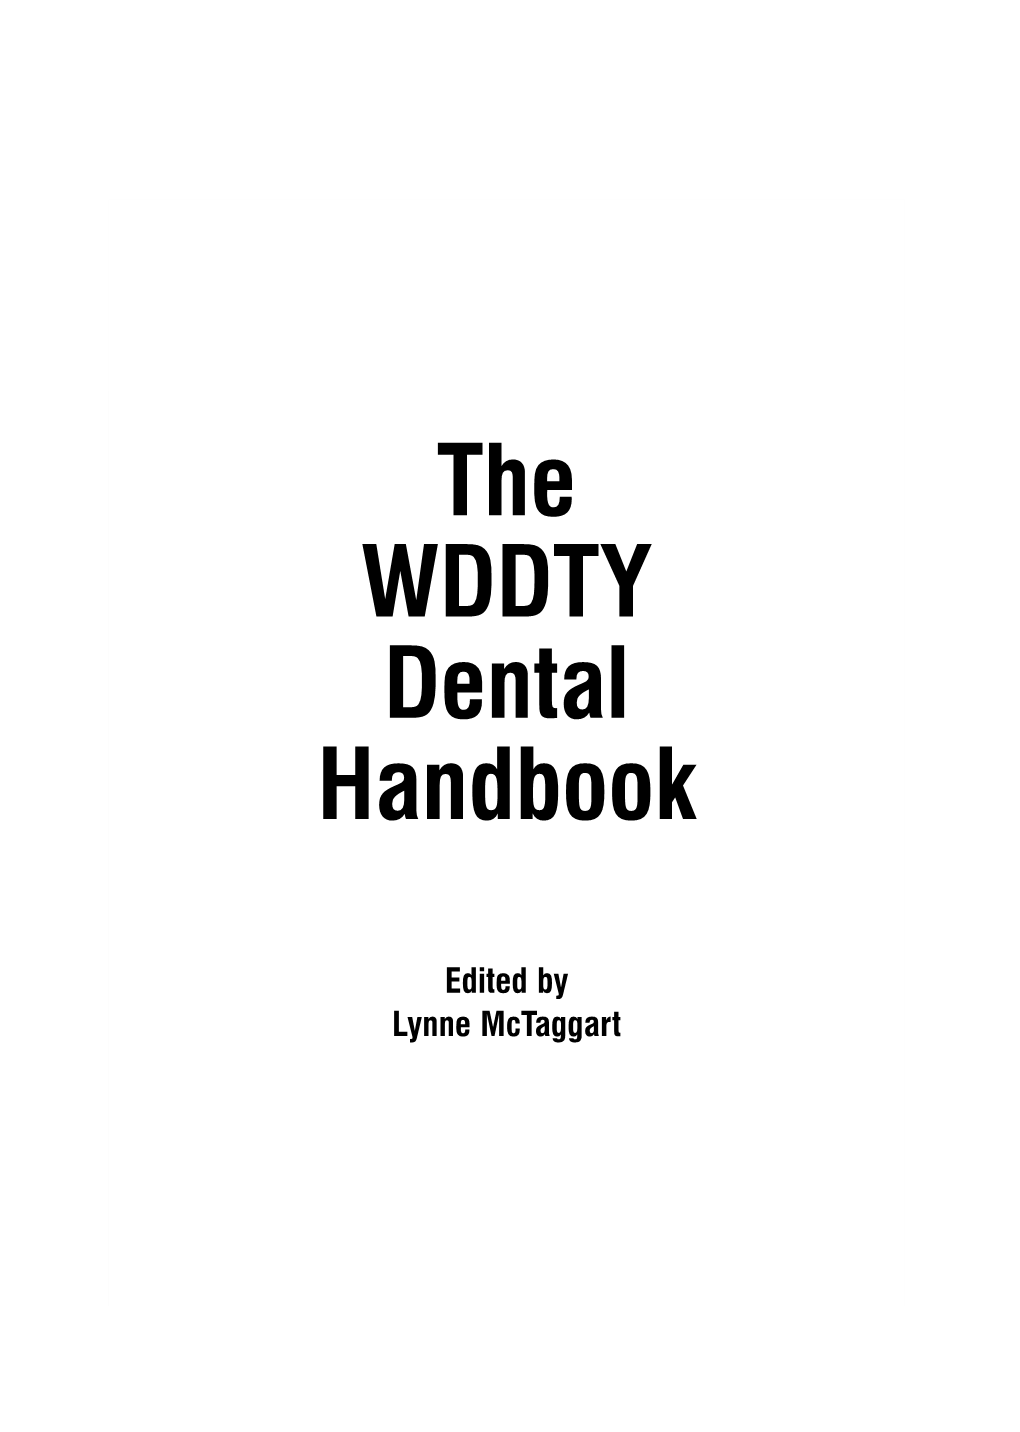 The WDDTY Dental Handbook